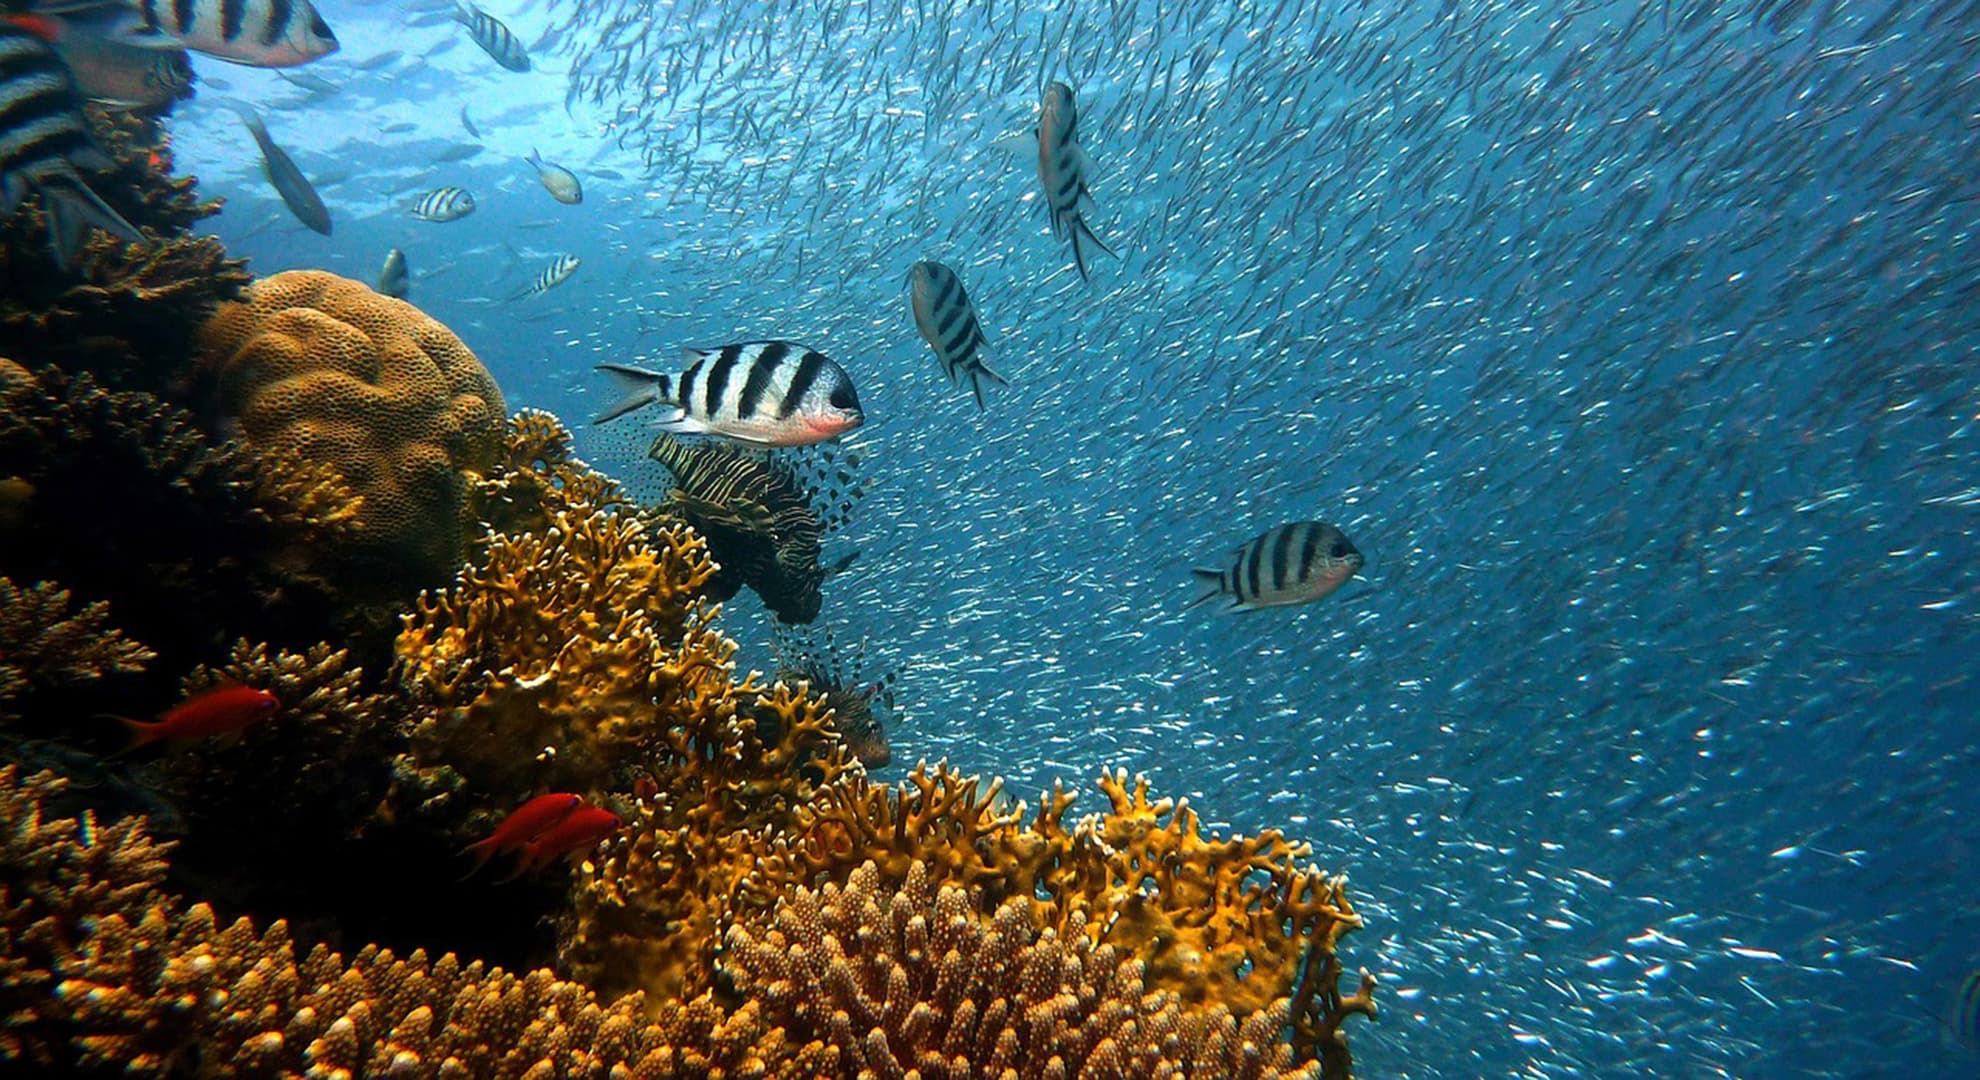 Image of fish under water in the ocean reefs